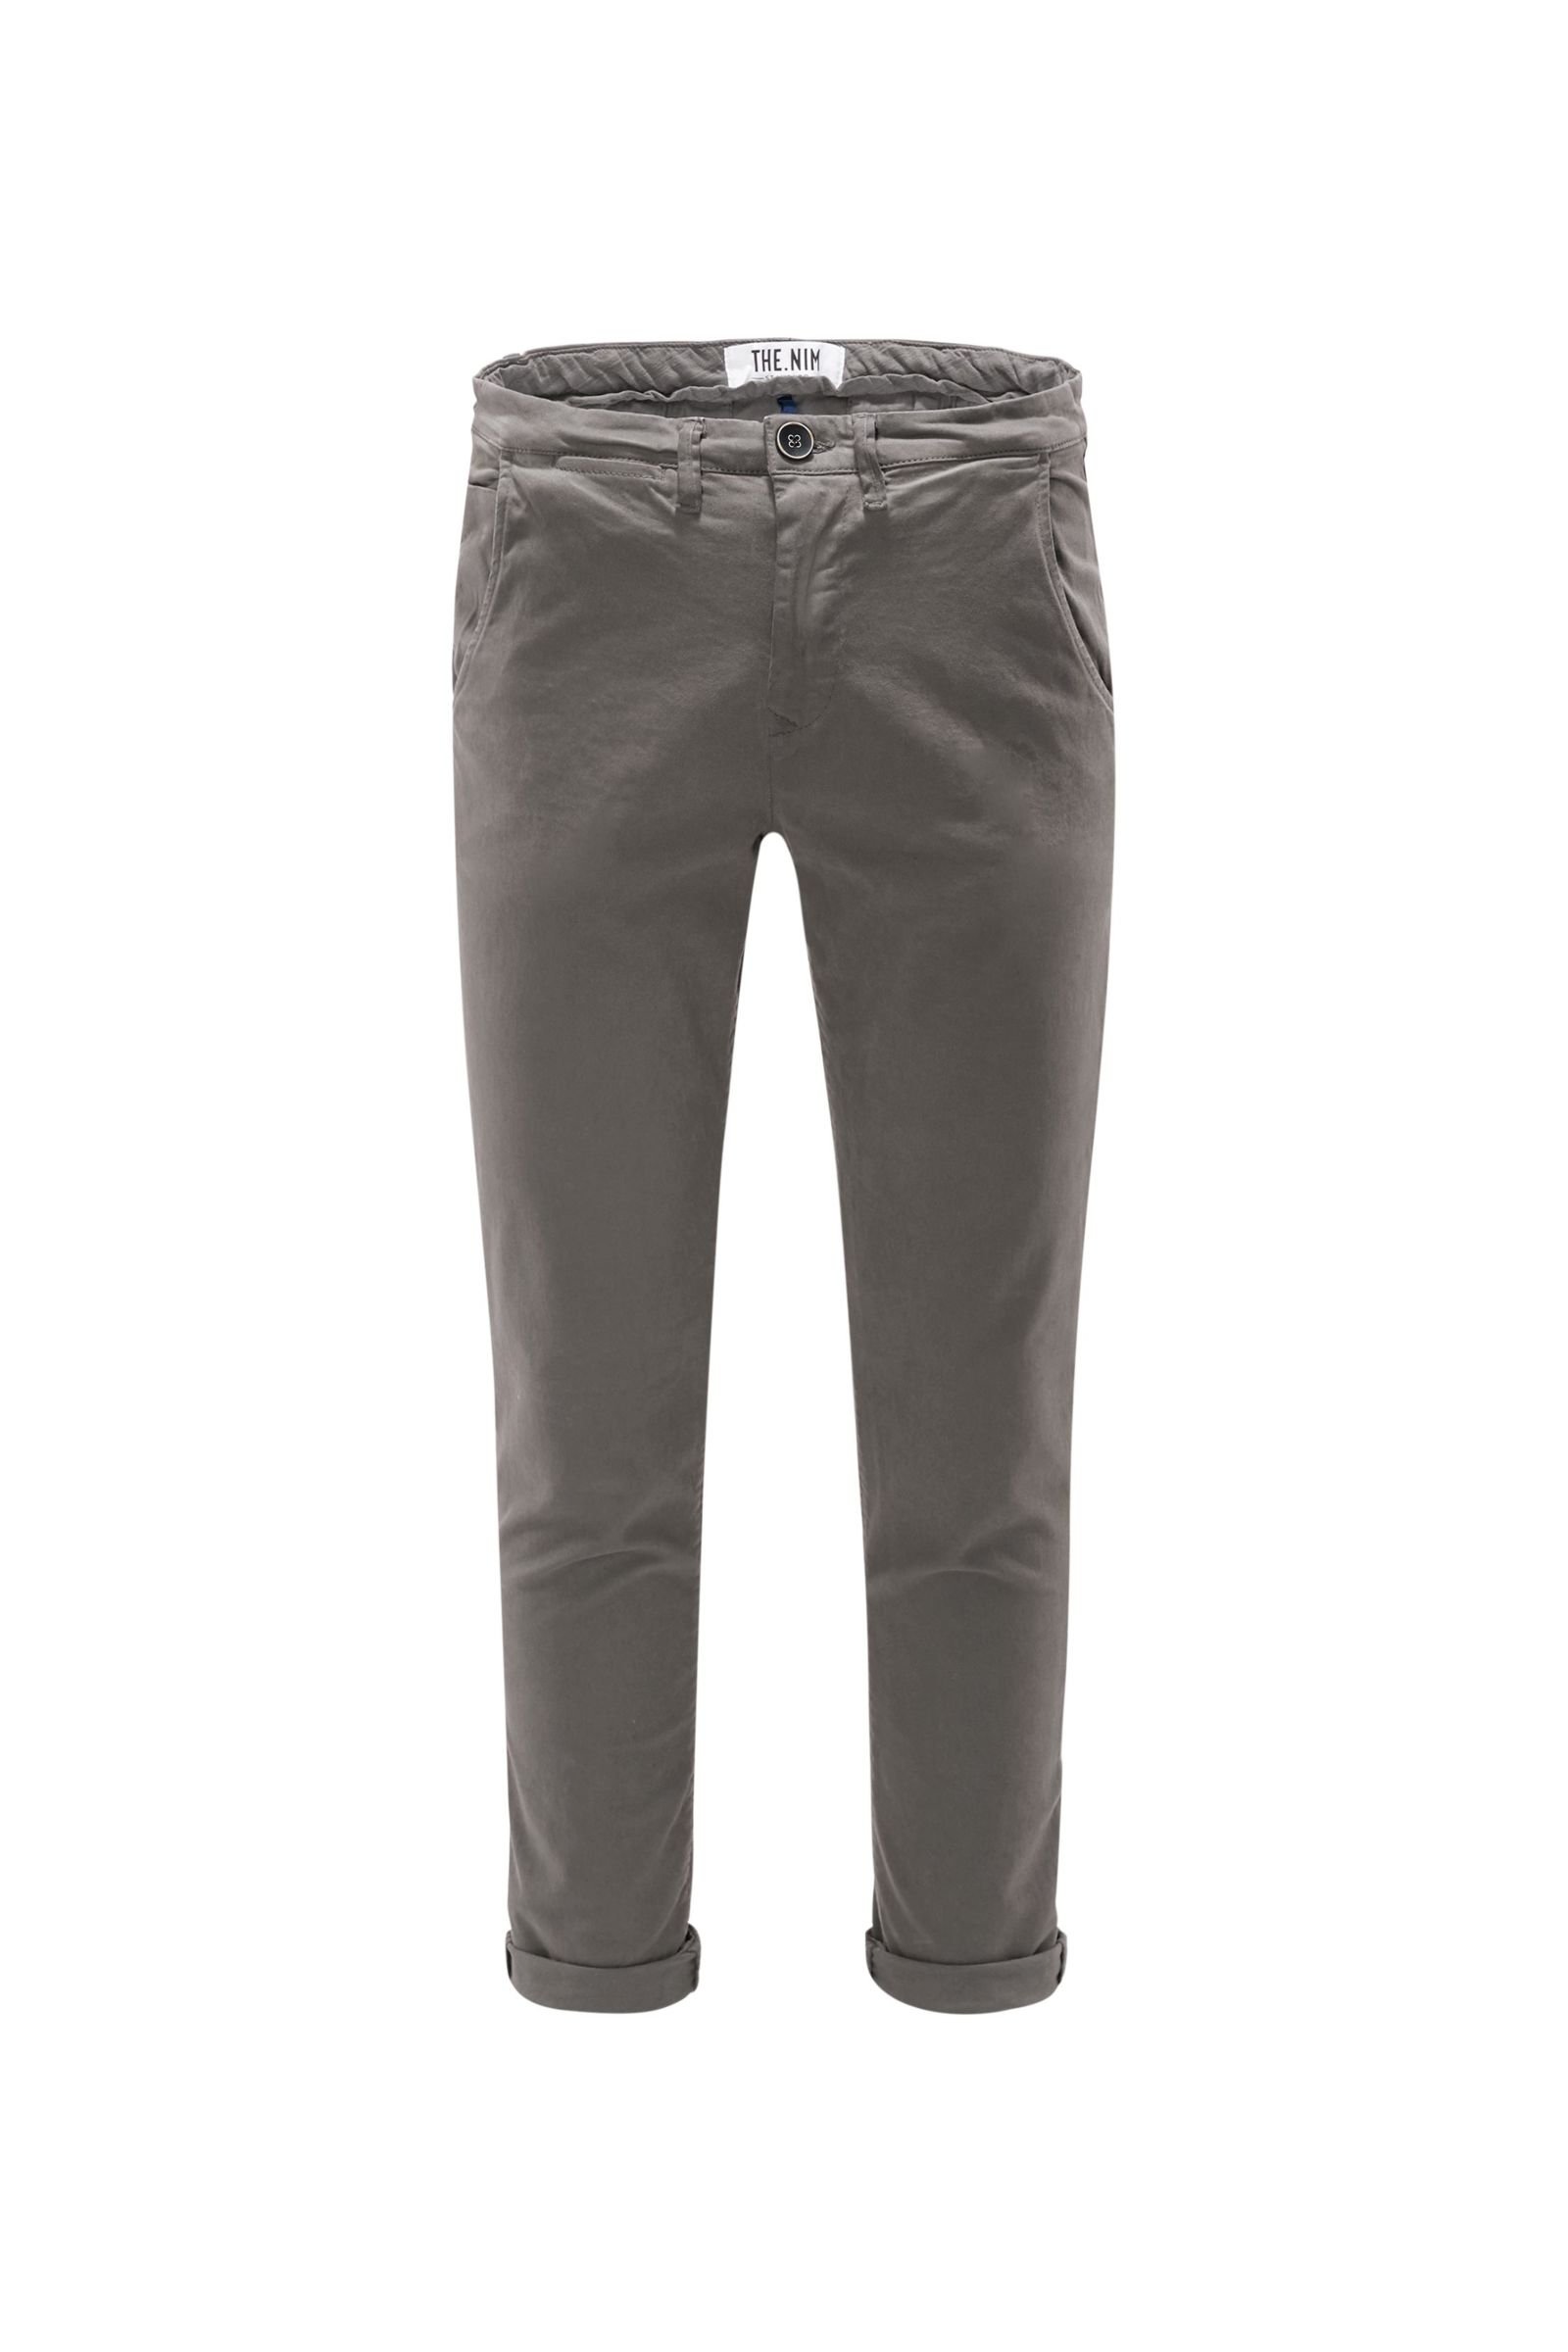 Cotton trousers dark grey